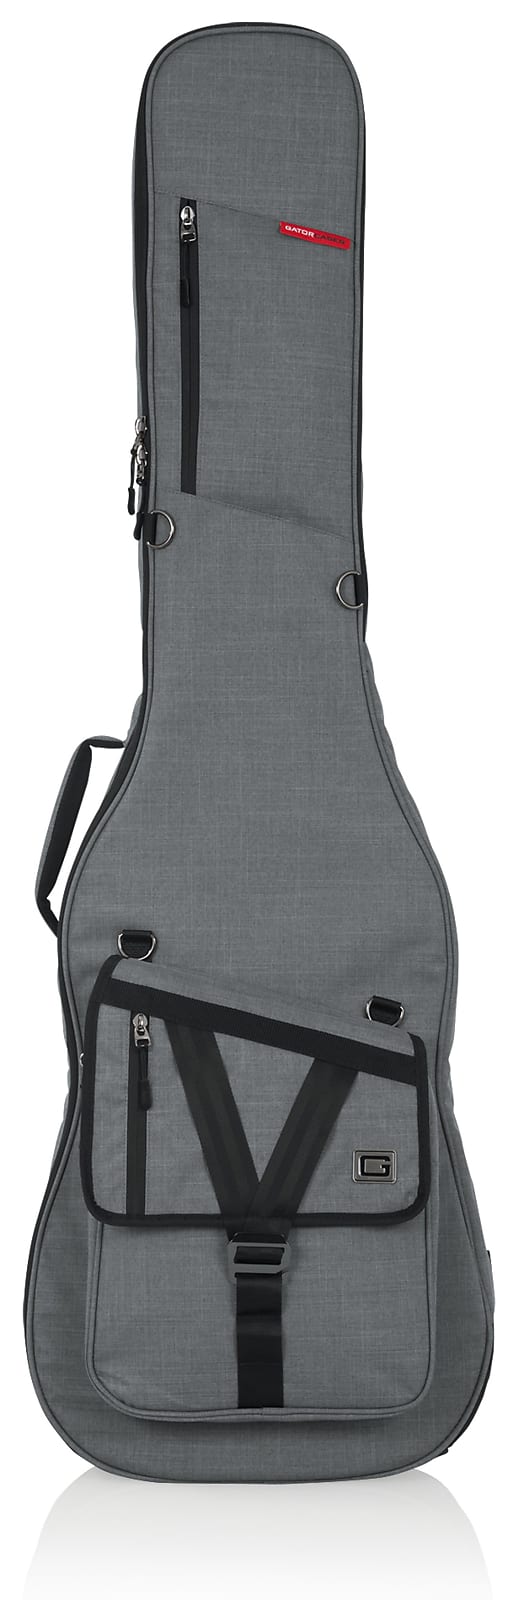 Gator Transit Bass Guitar Bag Grey